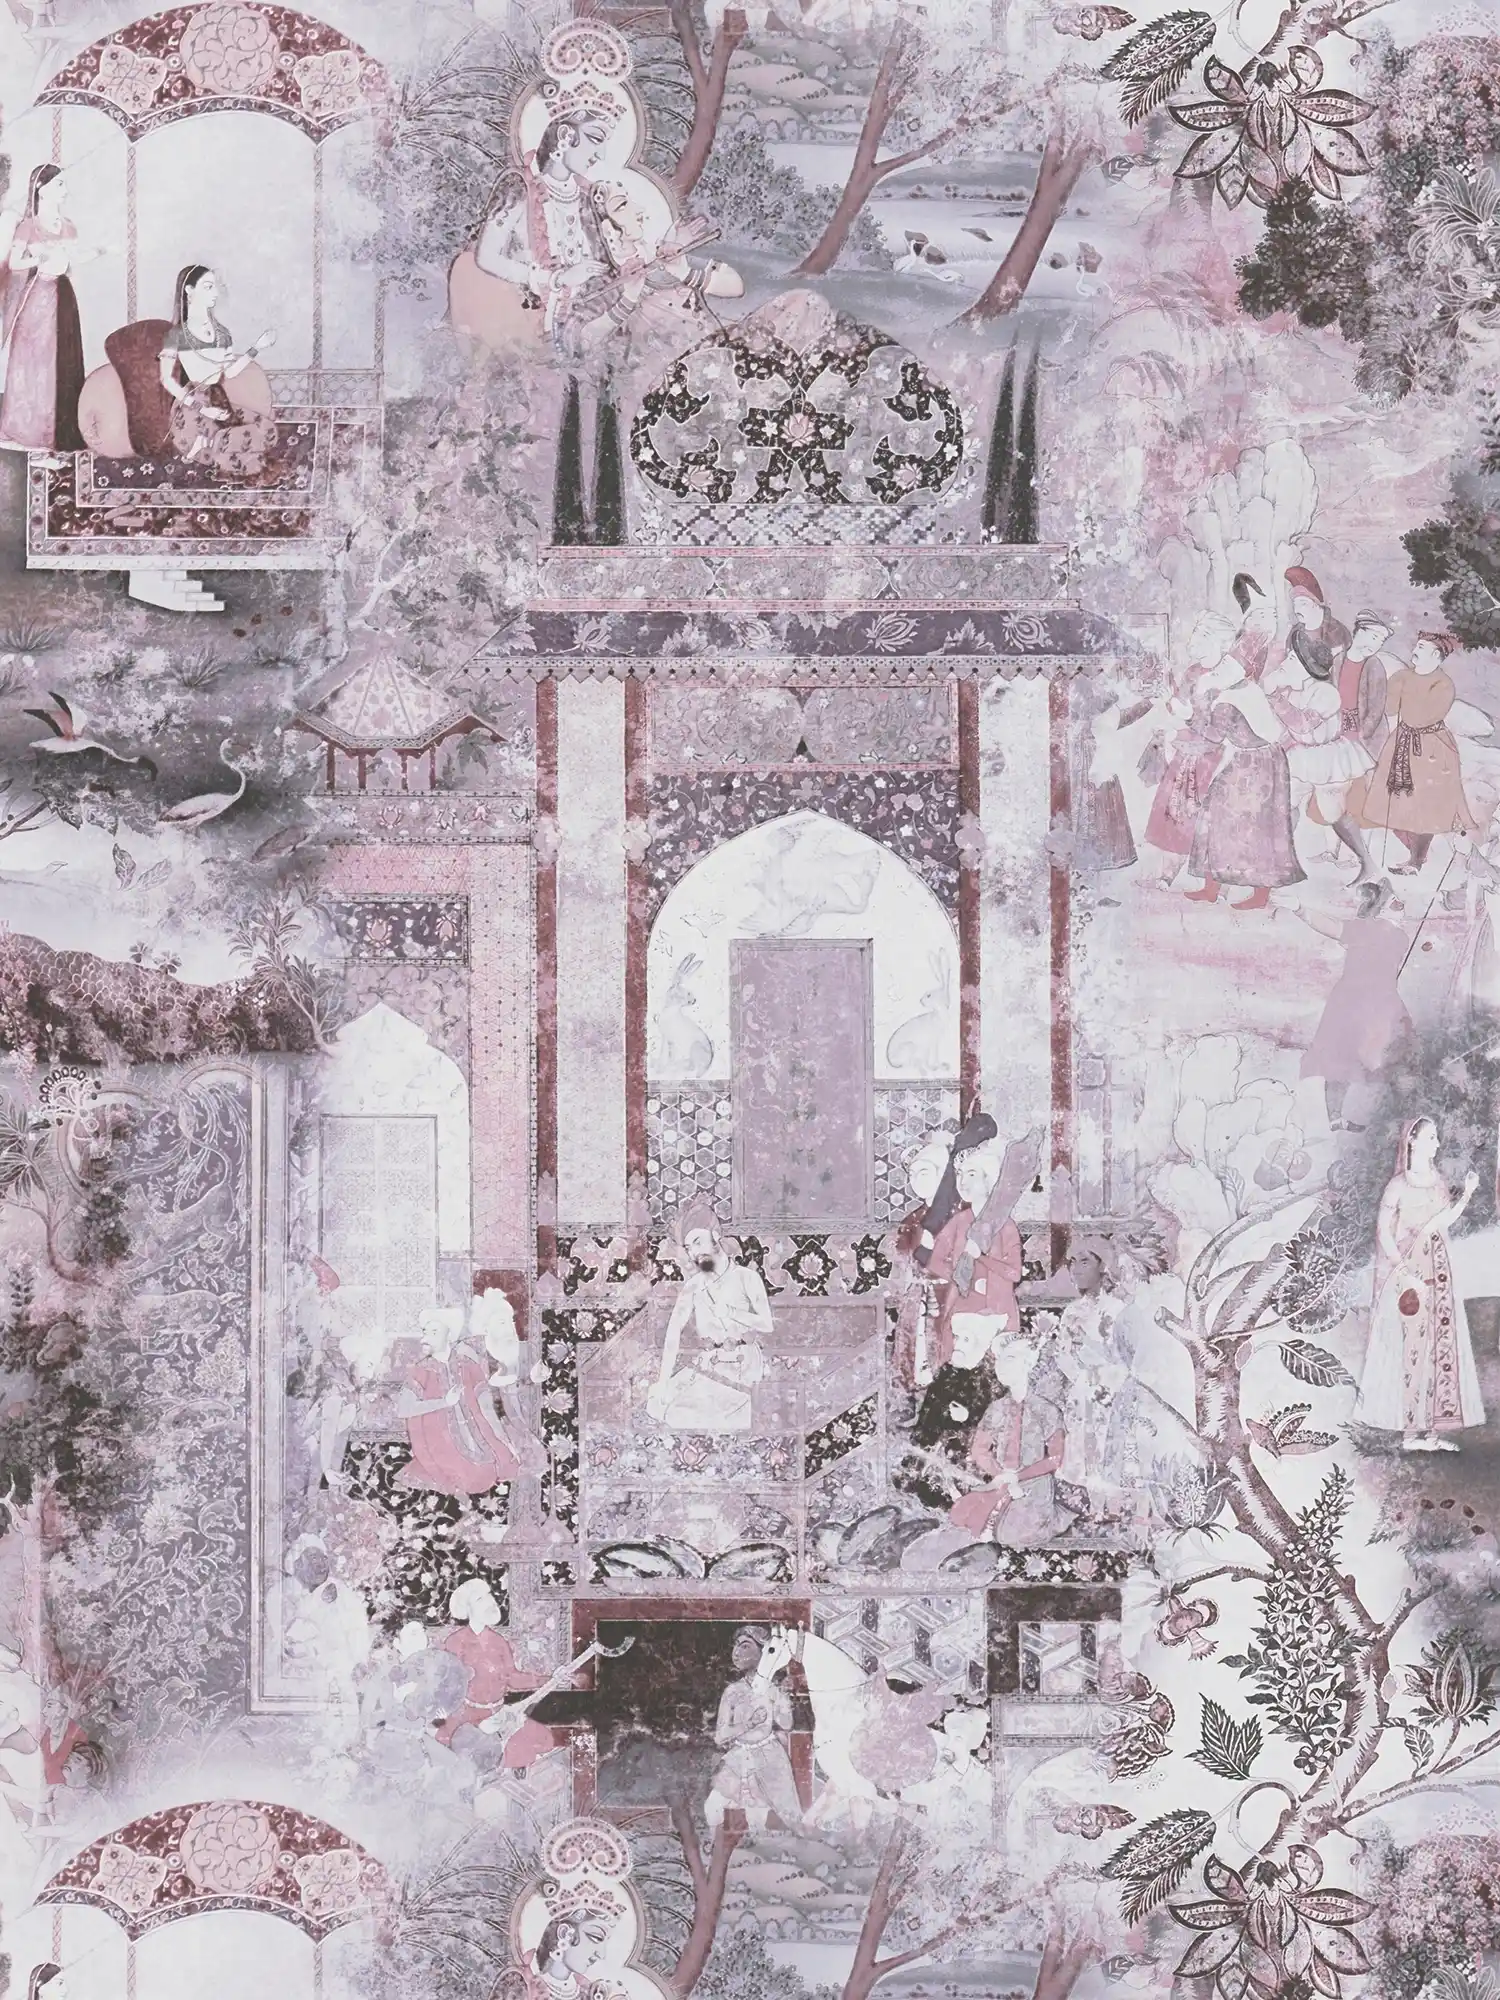             Indian wallpaper with vintage design - grey, pink
        